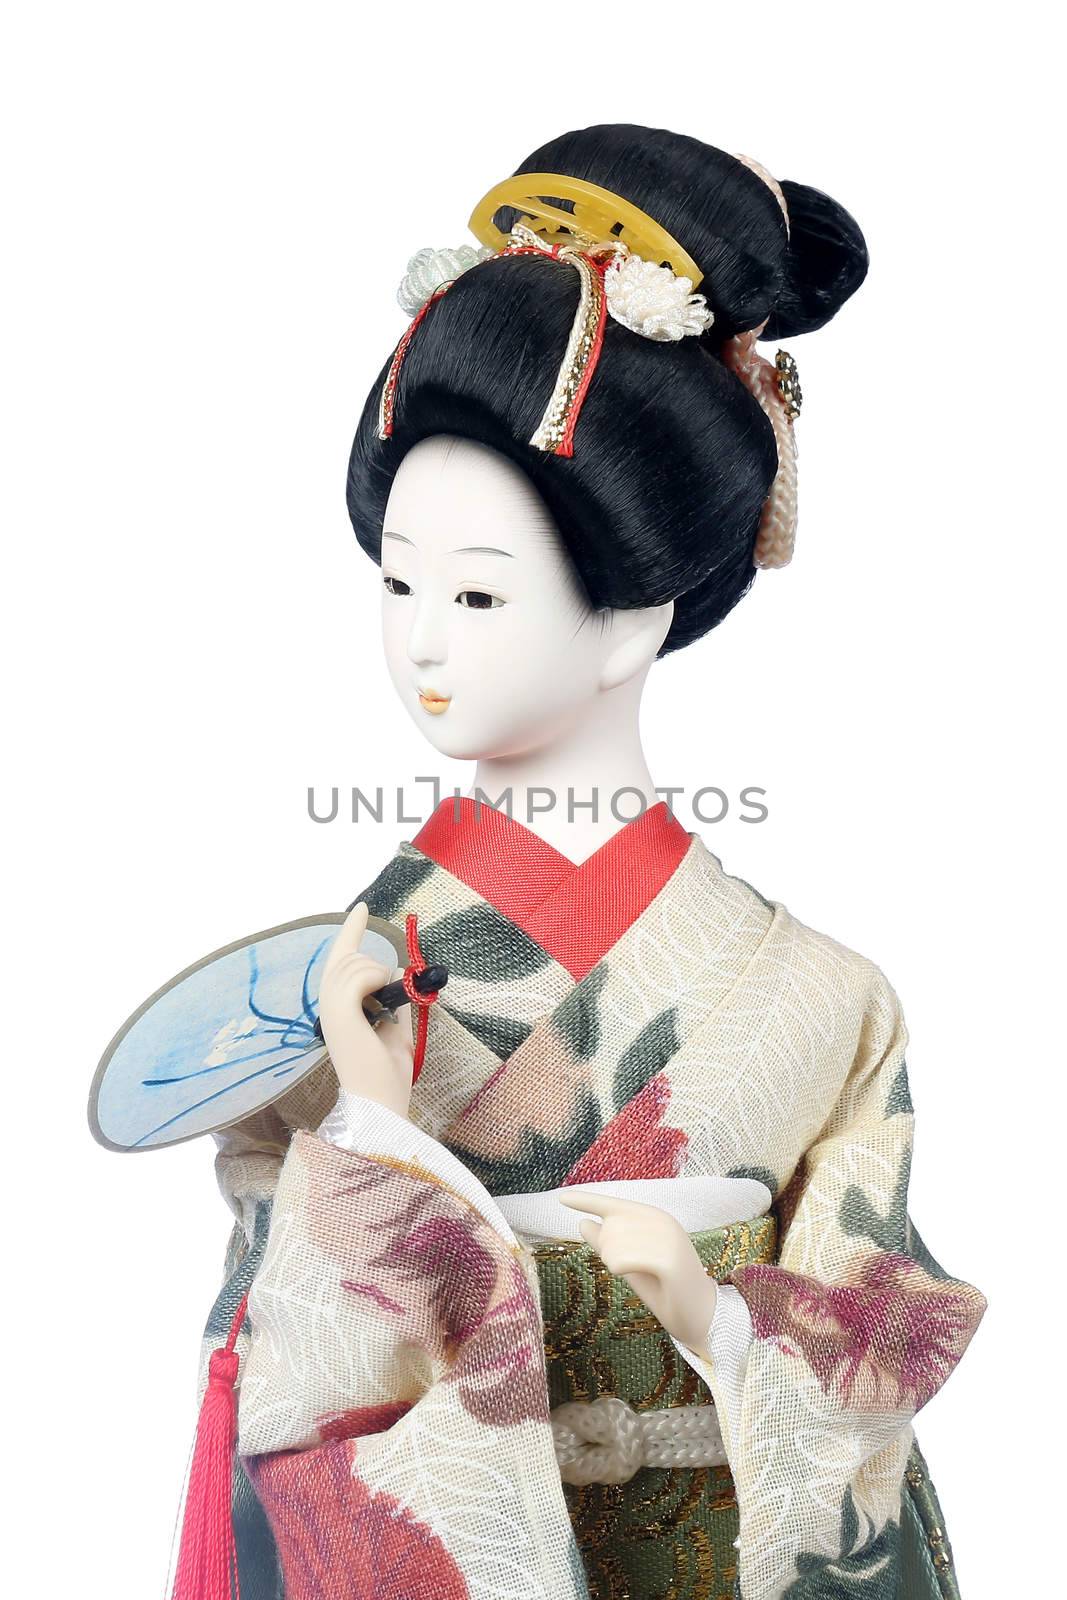 Japanese dolls by simpleBE